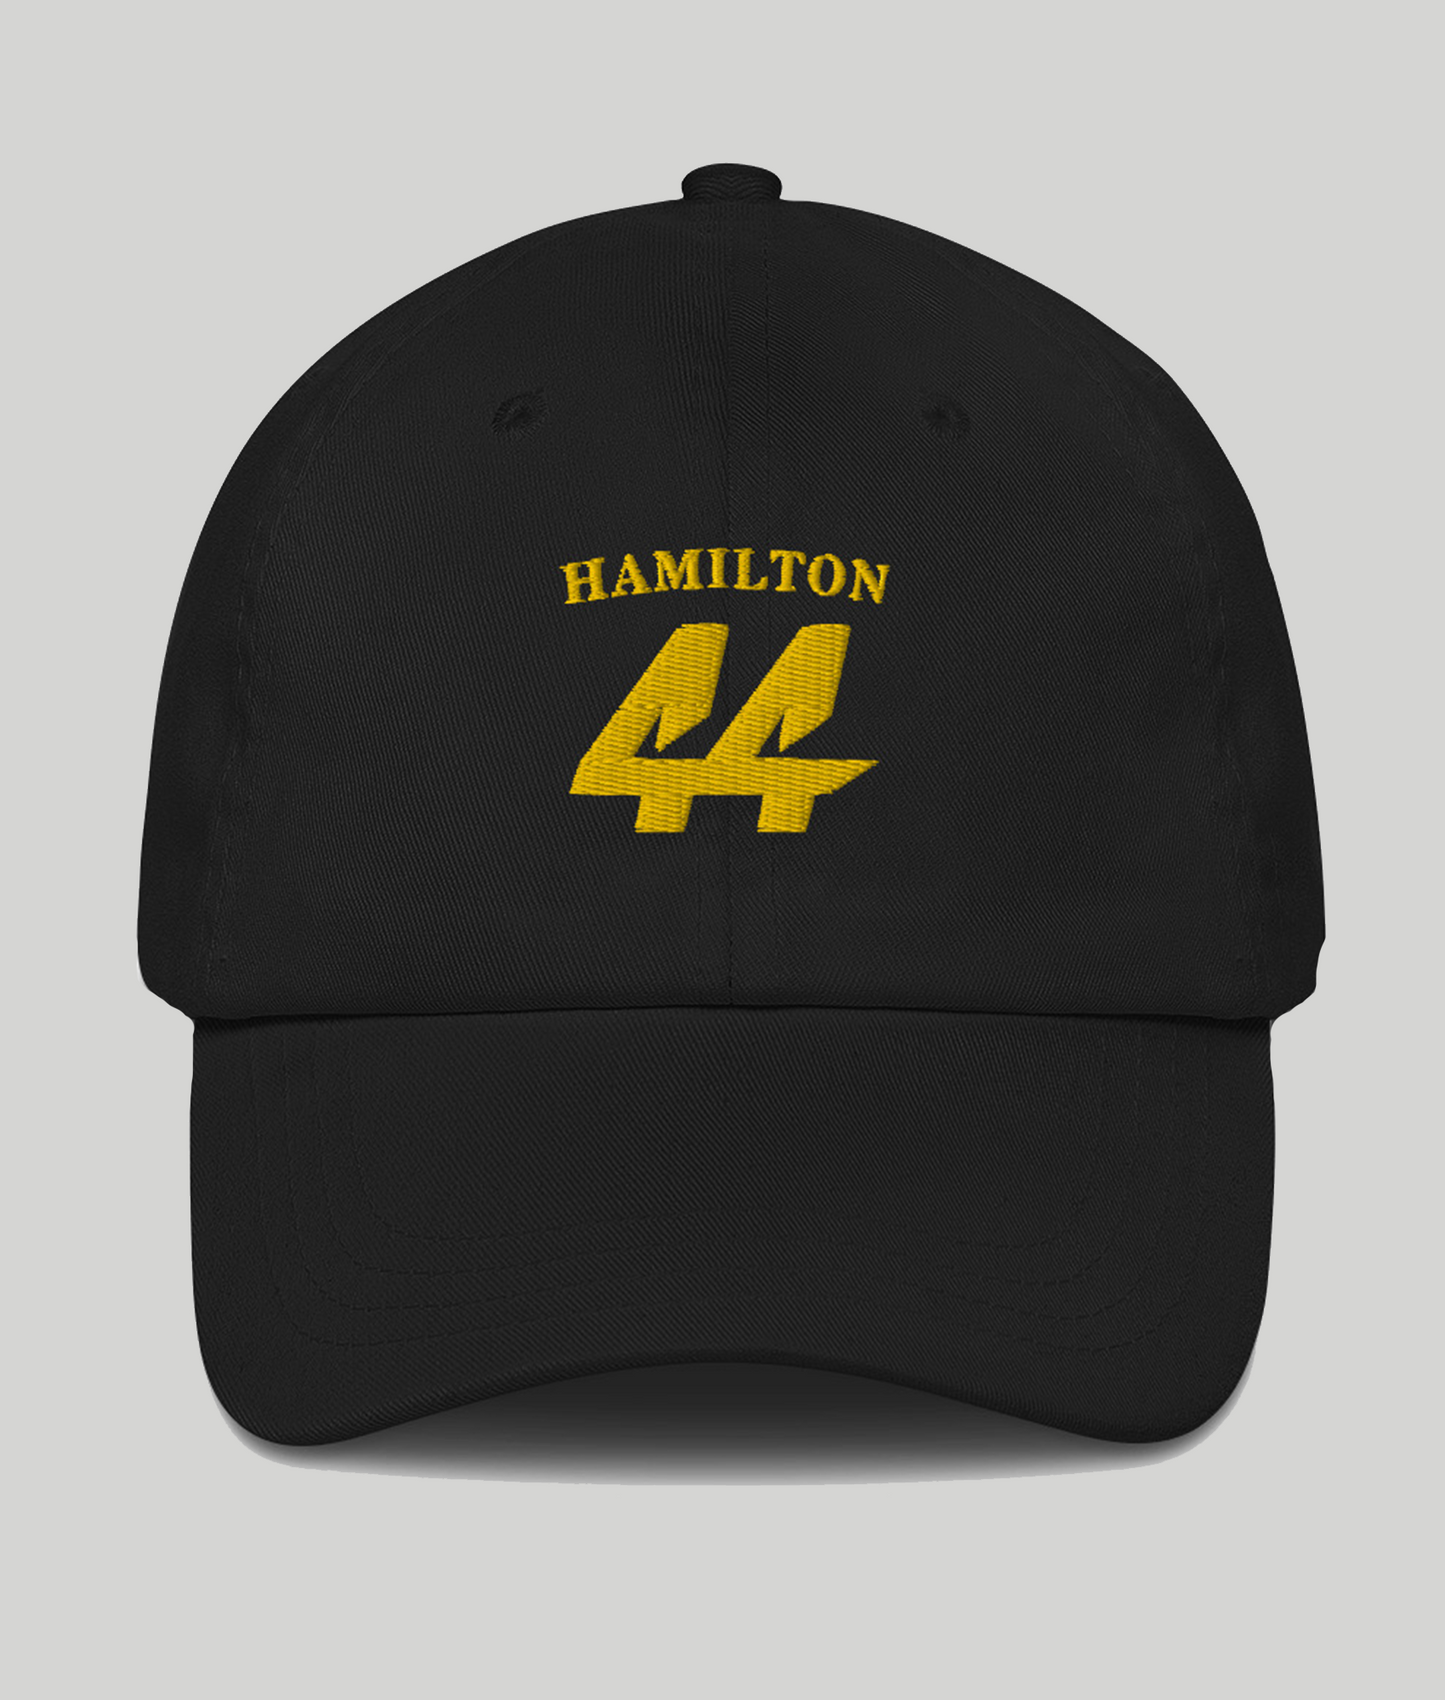 Lewis Hamilton 44 Hat